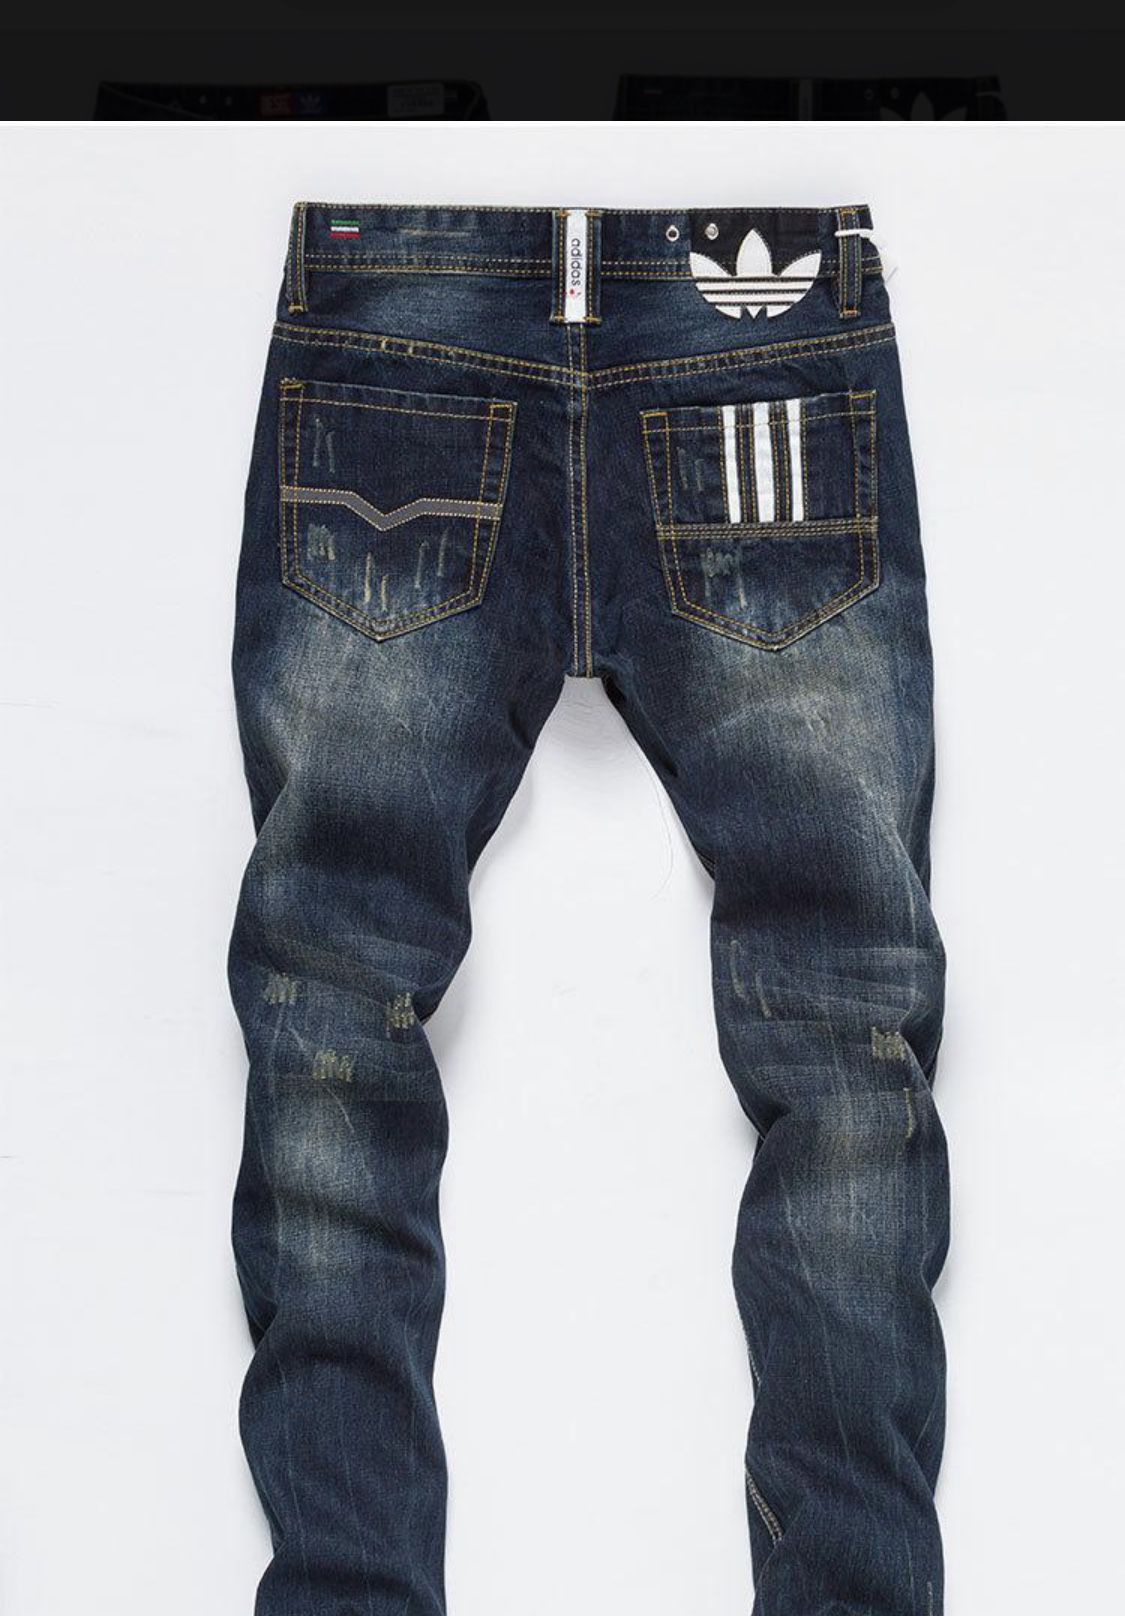 Diesel Adidas Original Slim Fit Jean (Limited Edition)